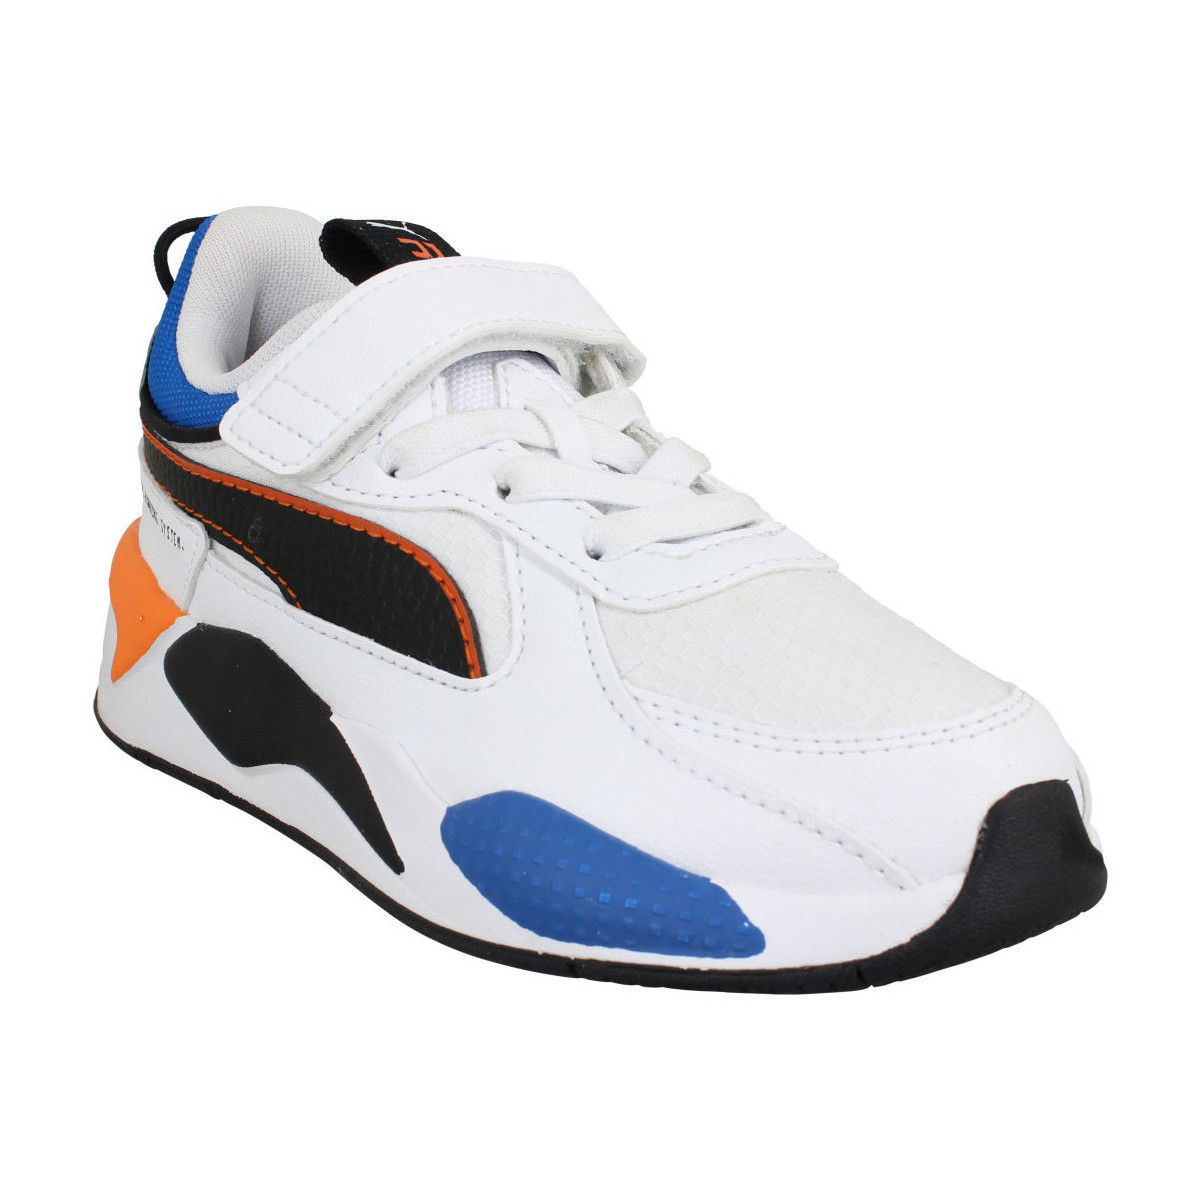 Sneakers Puma Rs X Eos 2 Elast Toile Enfant Blanc Orange